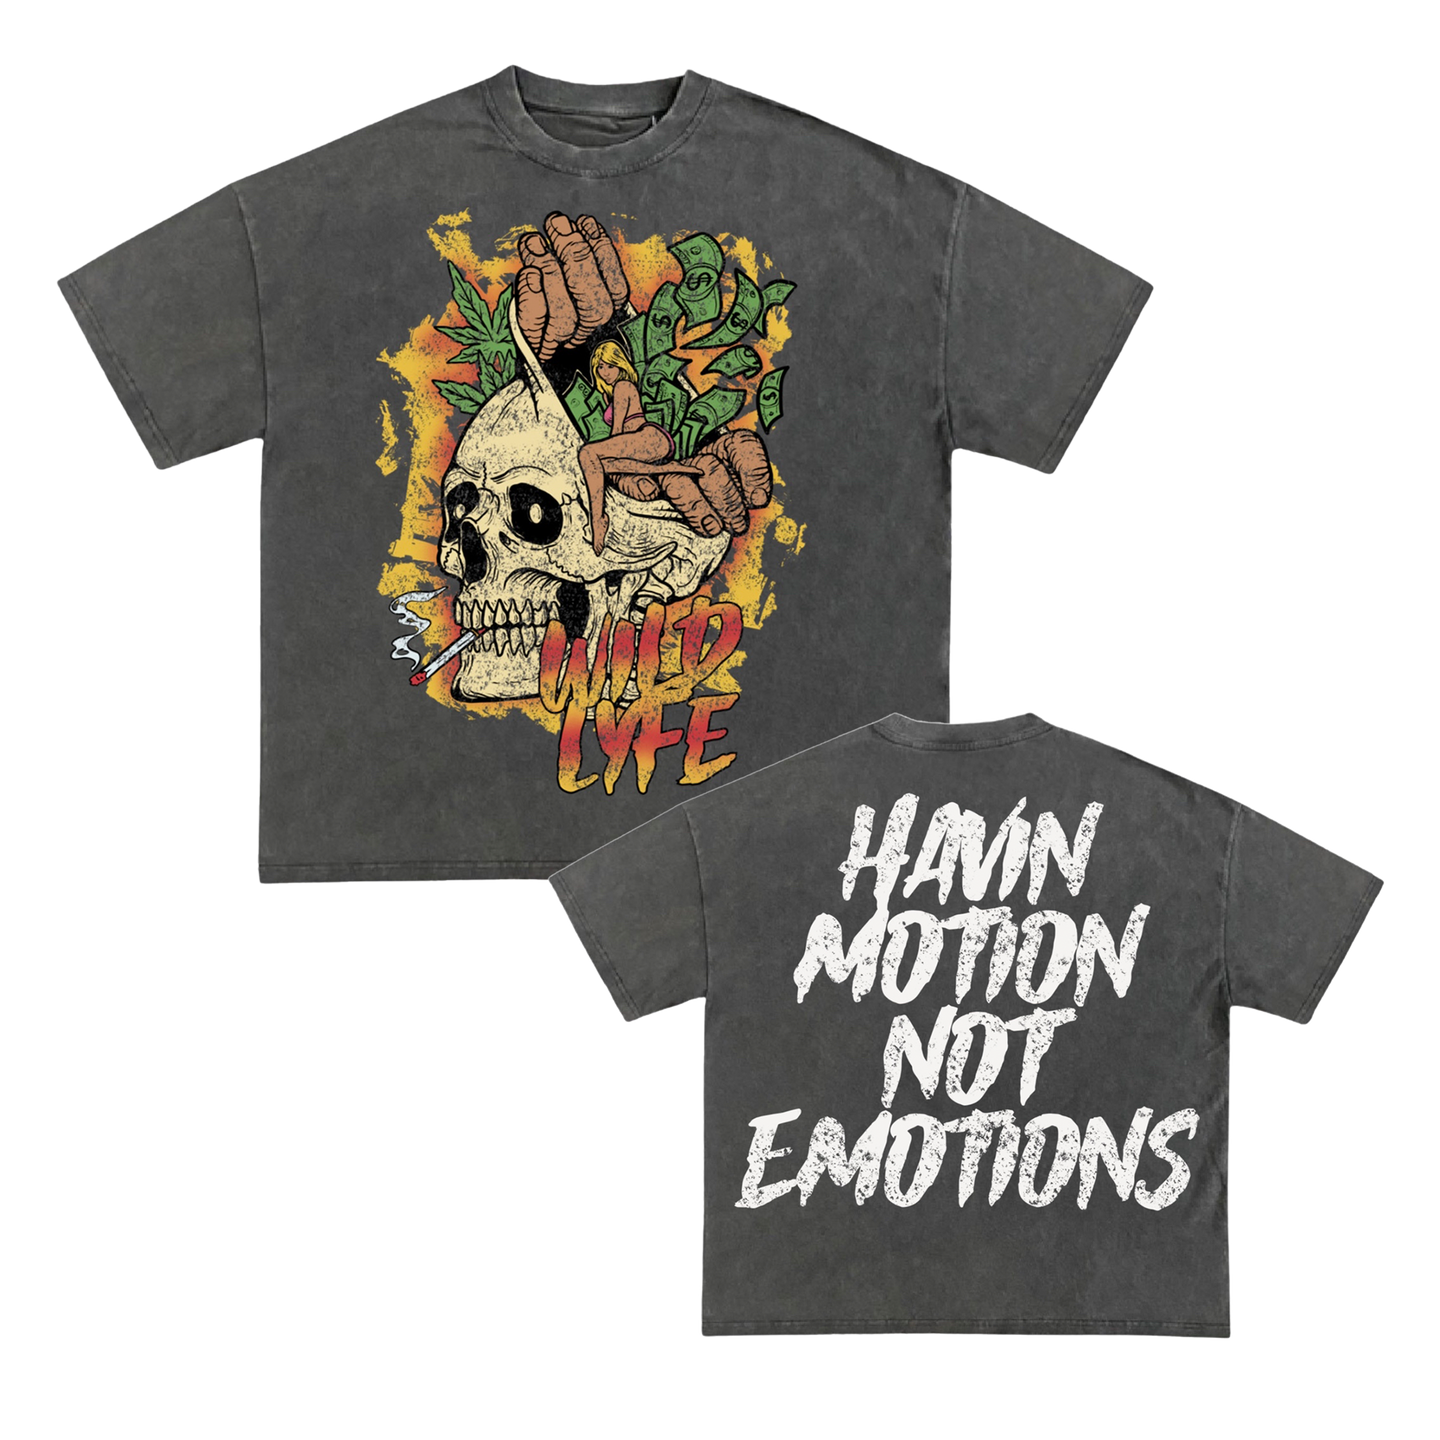 “Havin motion, not emotions” Shirt